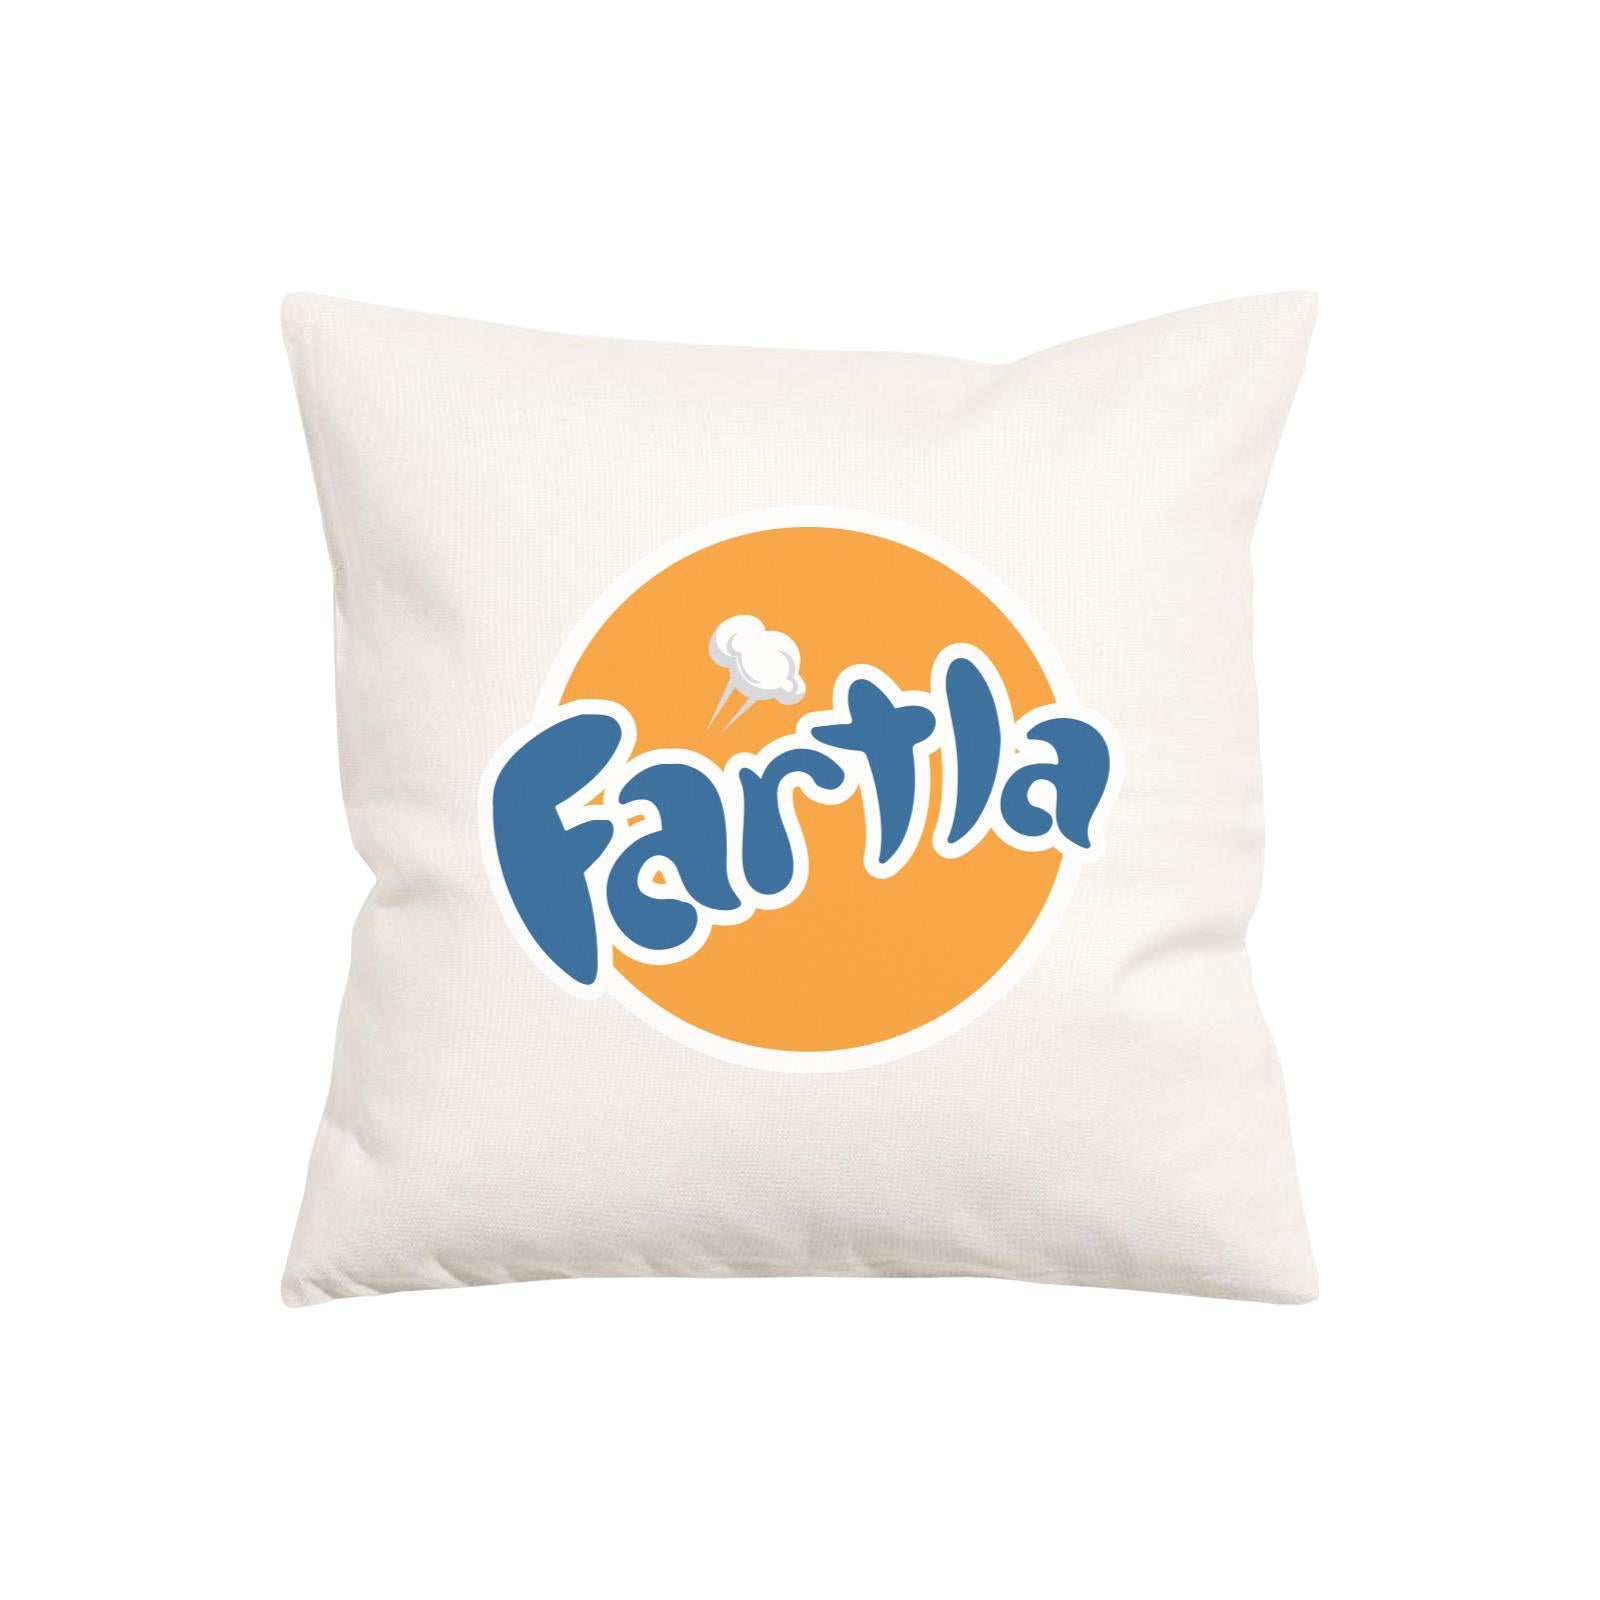 Slang Statement Fartla Pillow Cushion